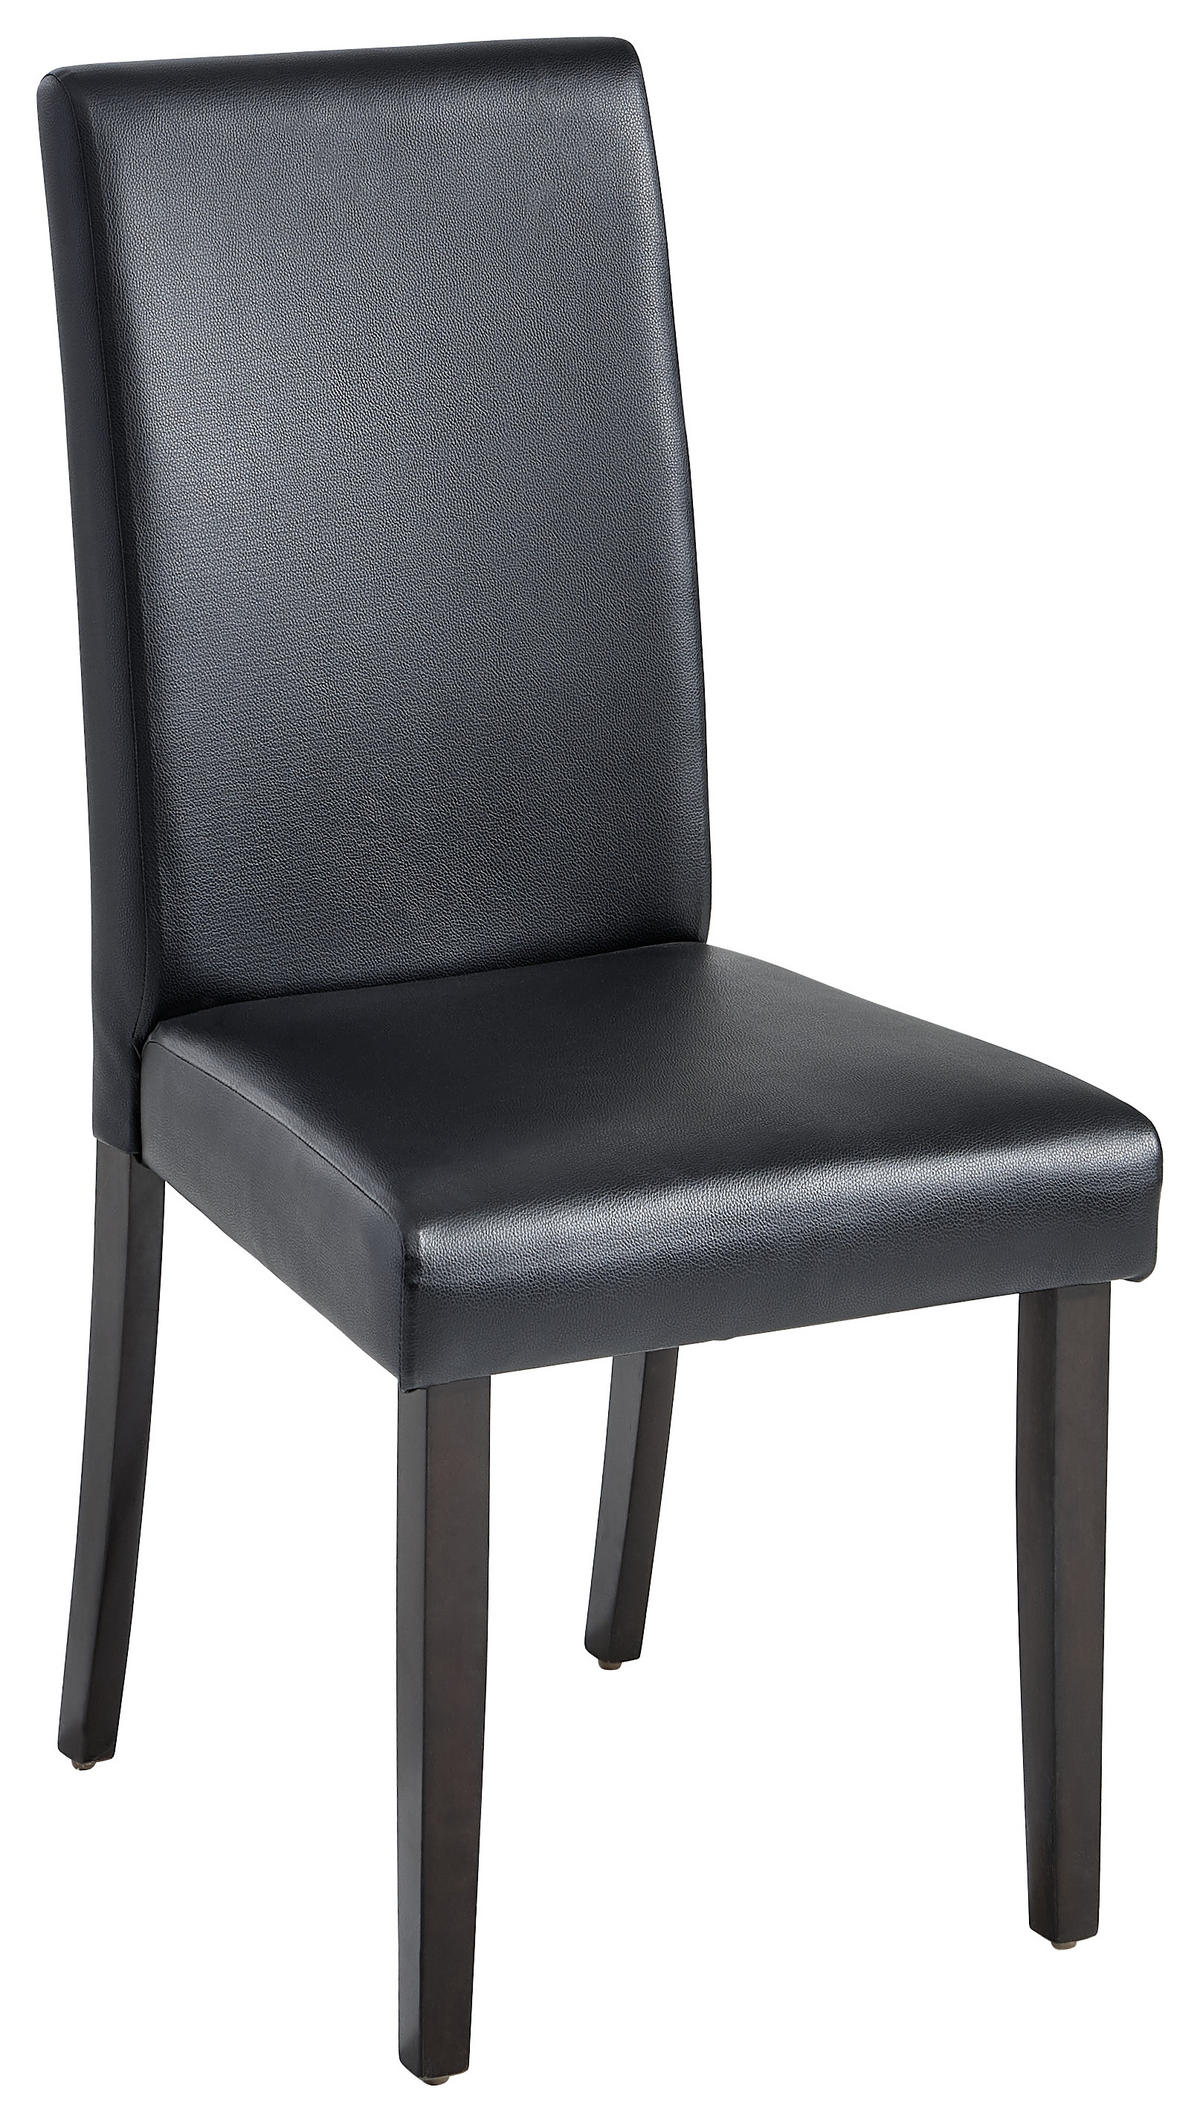 Stuhl-Set Lederlook finden in Schwarz online